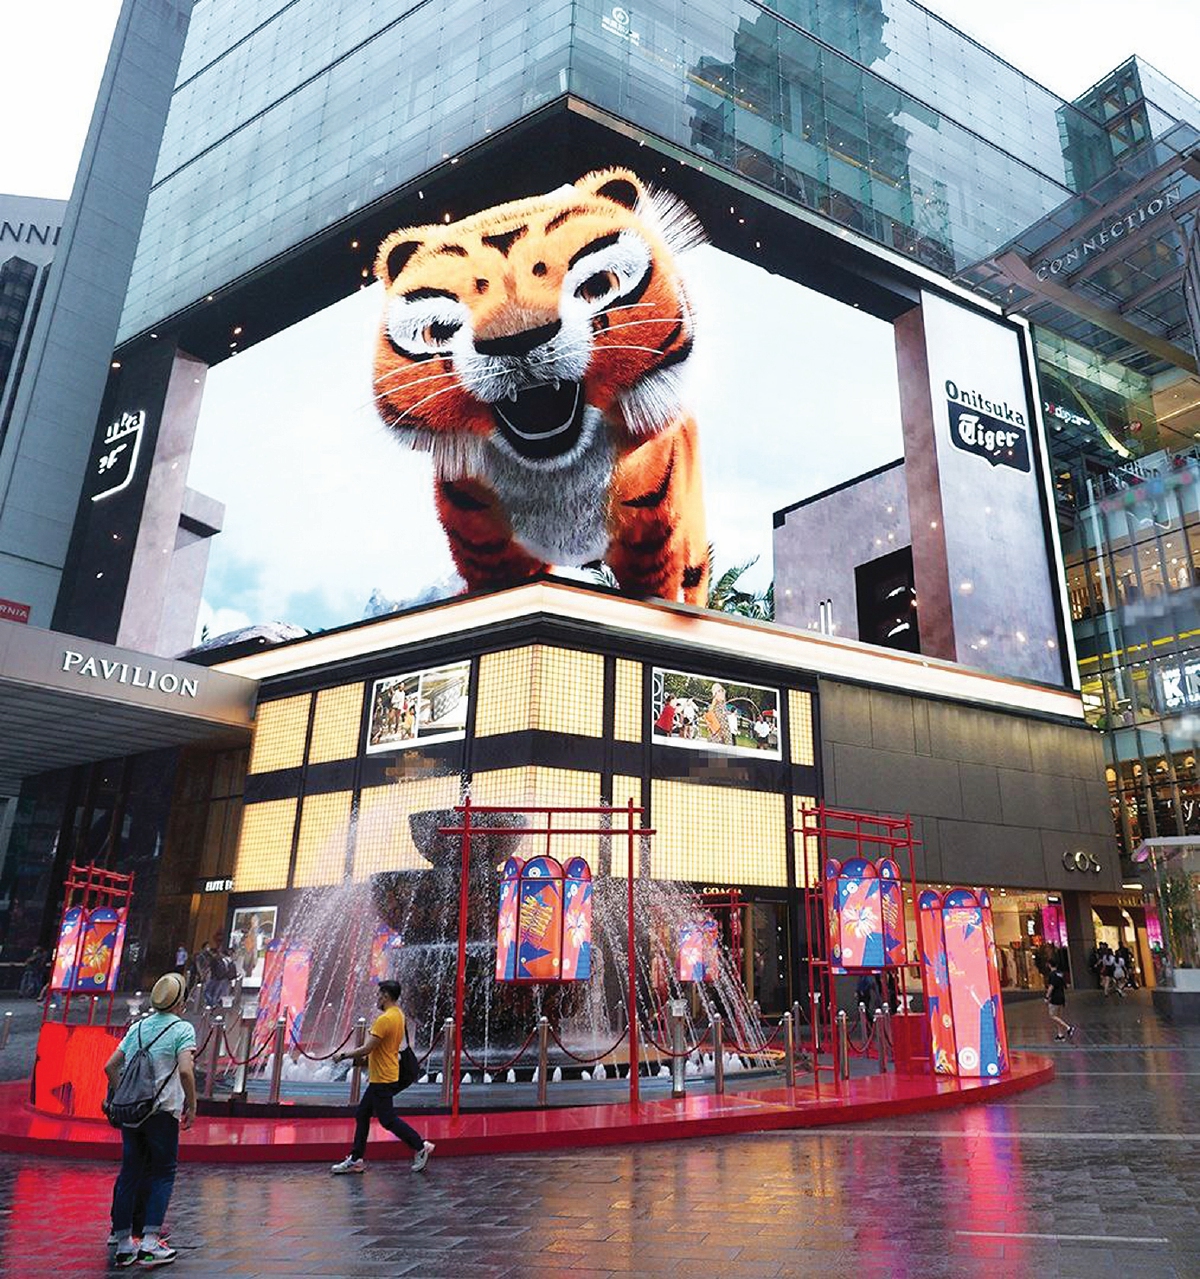 ANIMASI 3D menarik menghiasi kedai flagship Onitsuka Tiger di pusat beli-belah Pavilion Kuala Lumpur sempena sambutan Tahun Baharu Cina. 